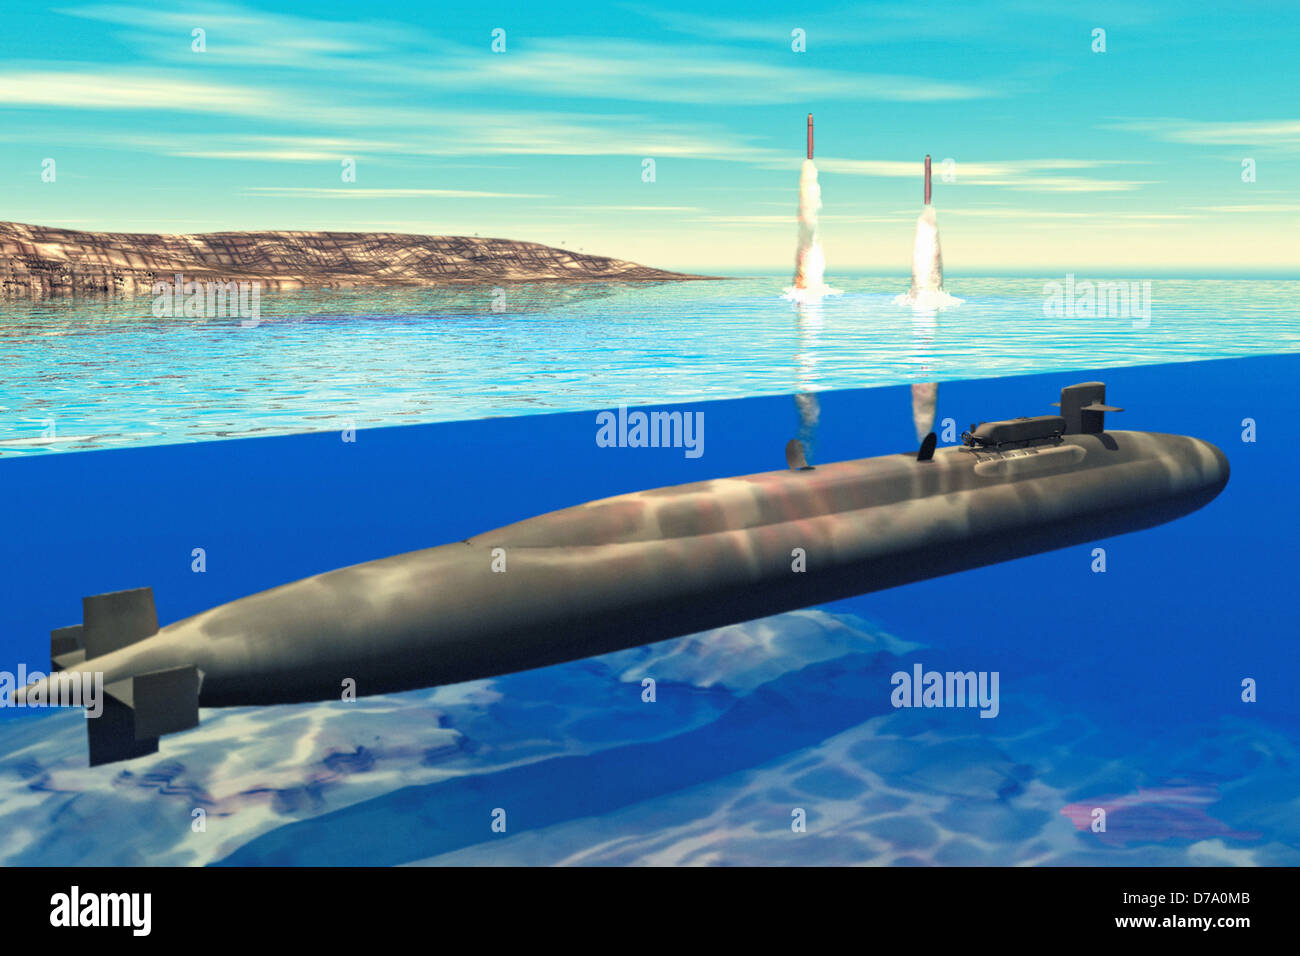 Artist Concept Converted Submarine Stock Photo